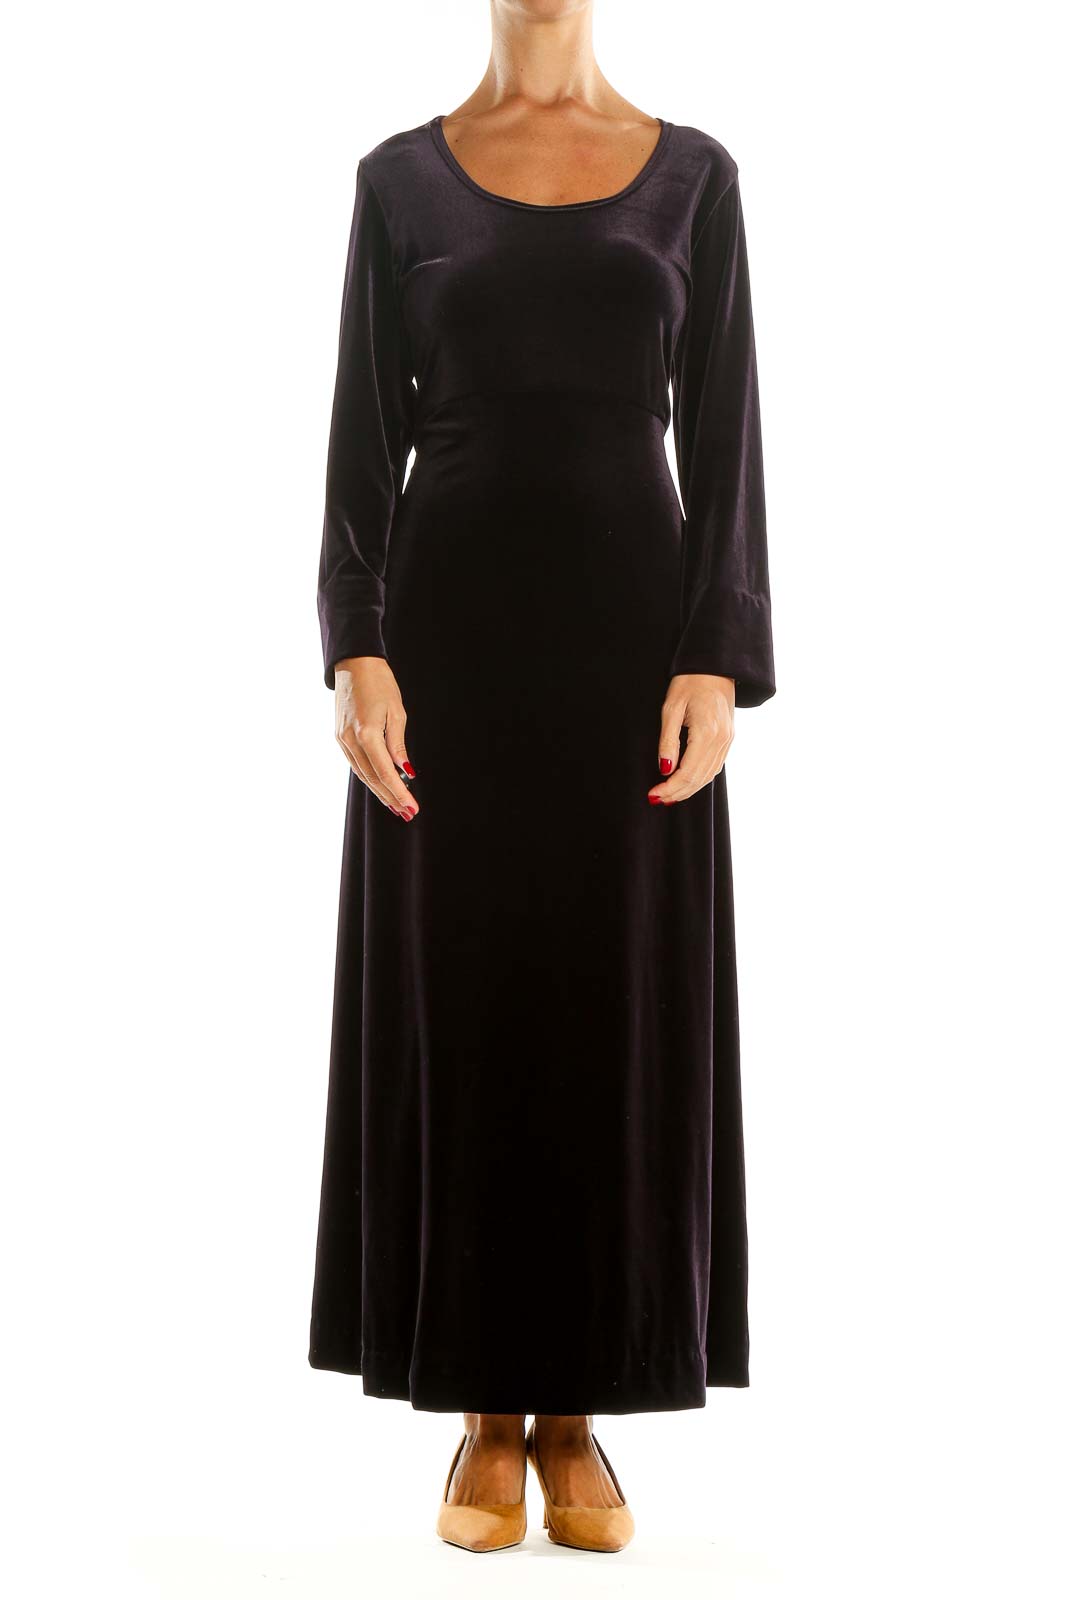 Black Velour Classic Column Dress Front